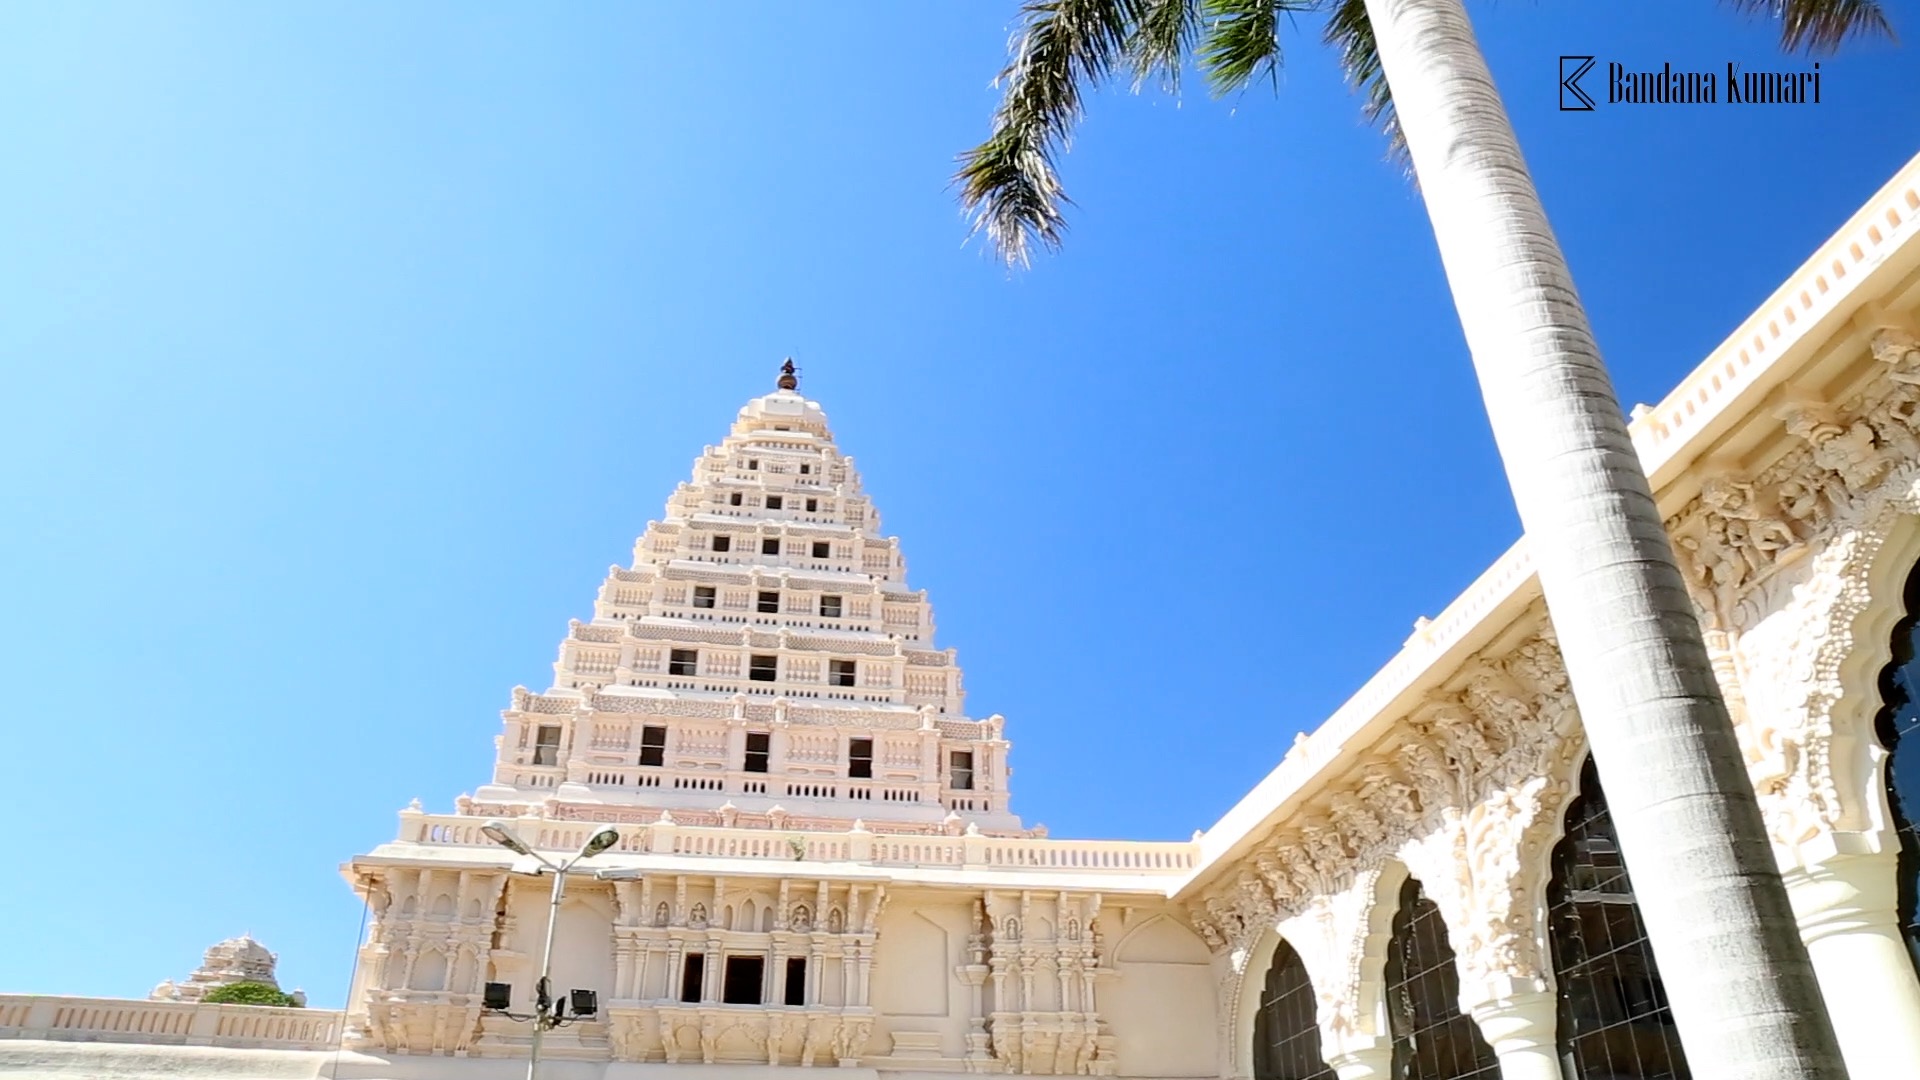 Thanjavur Palace Complex